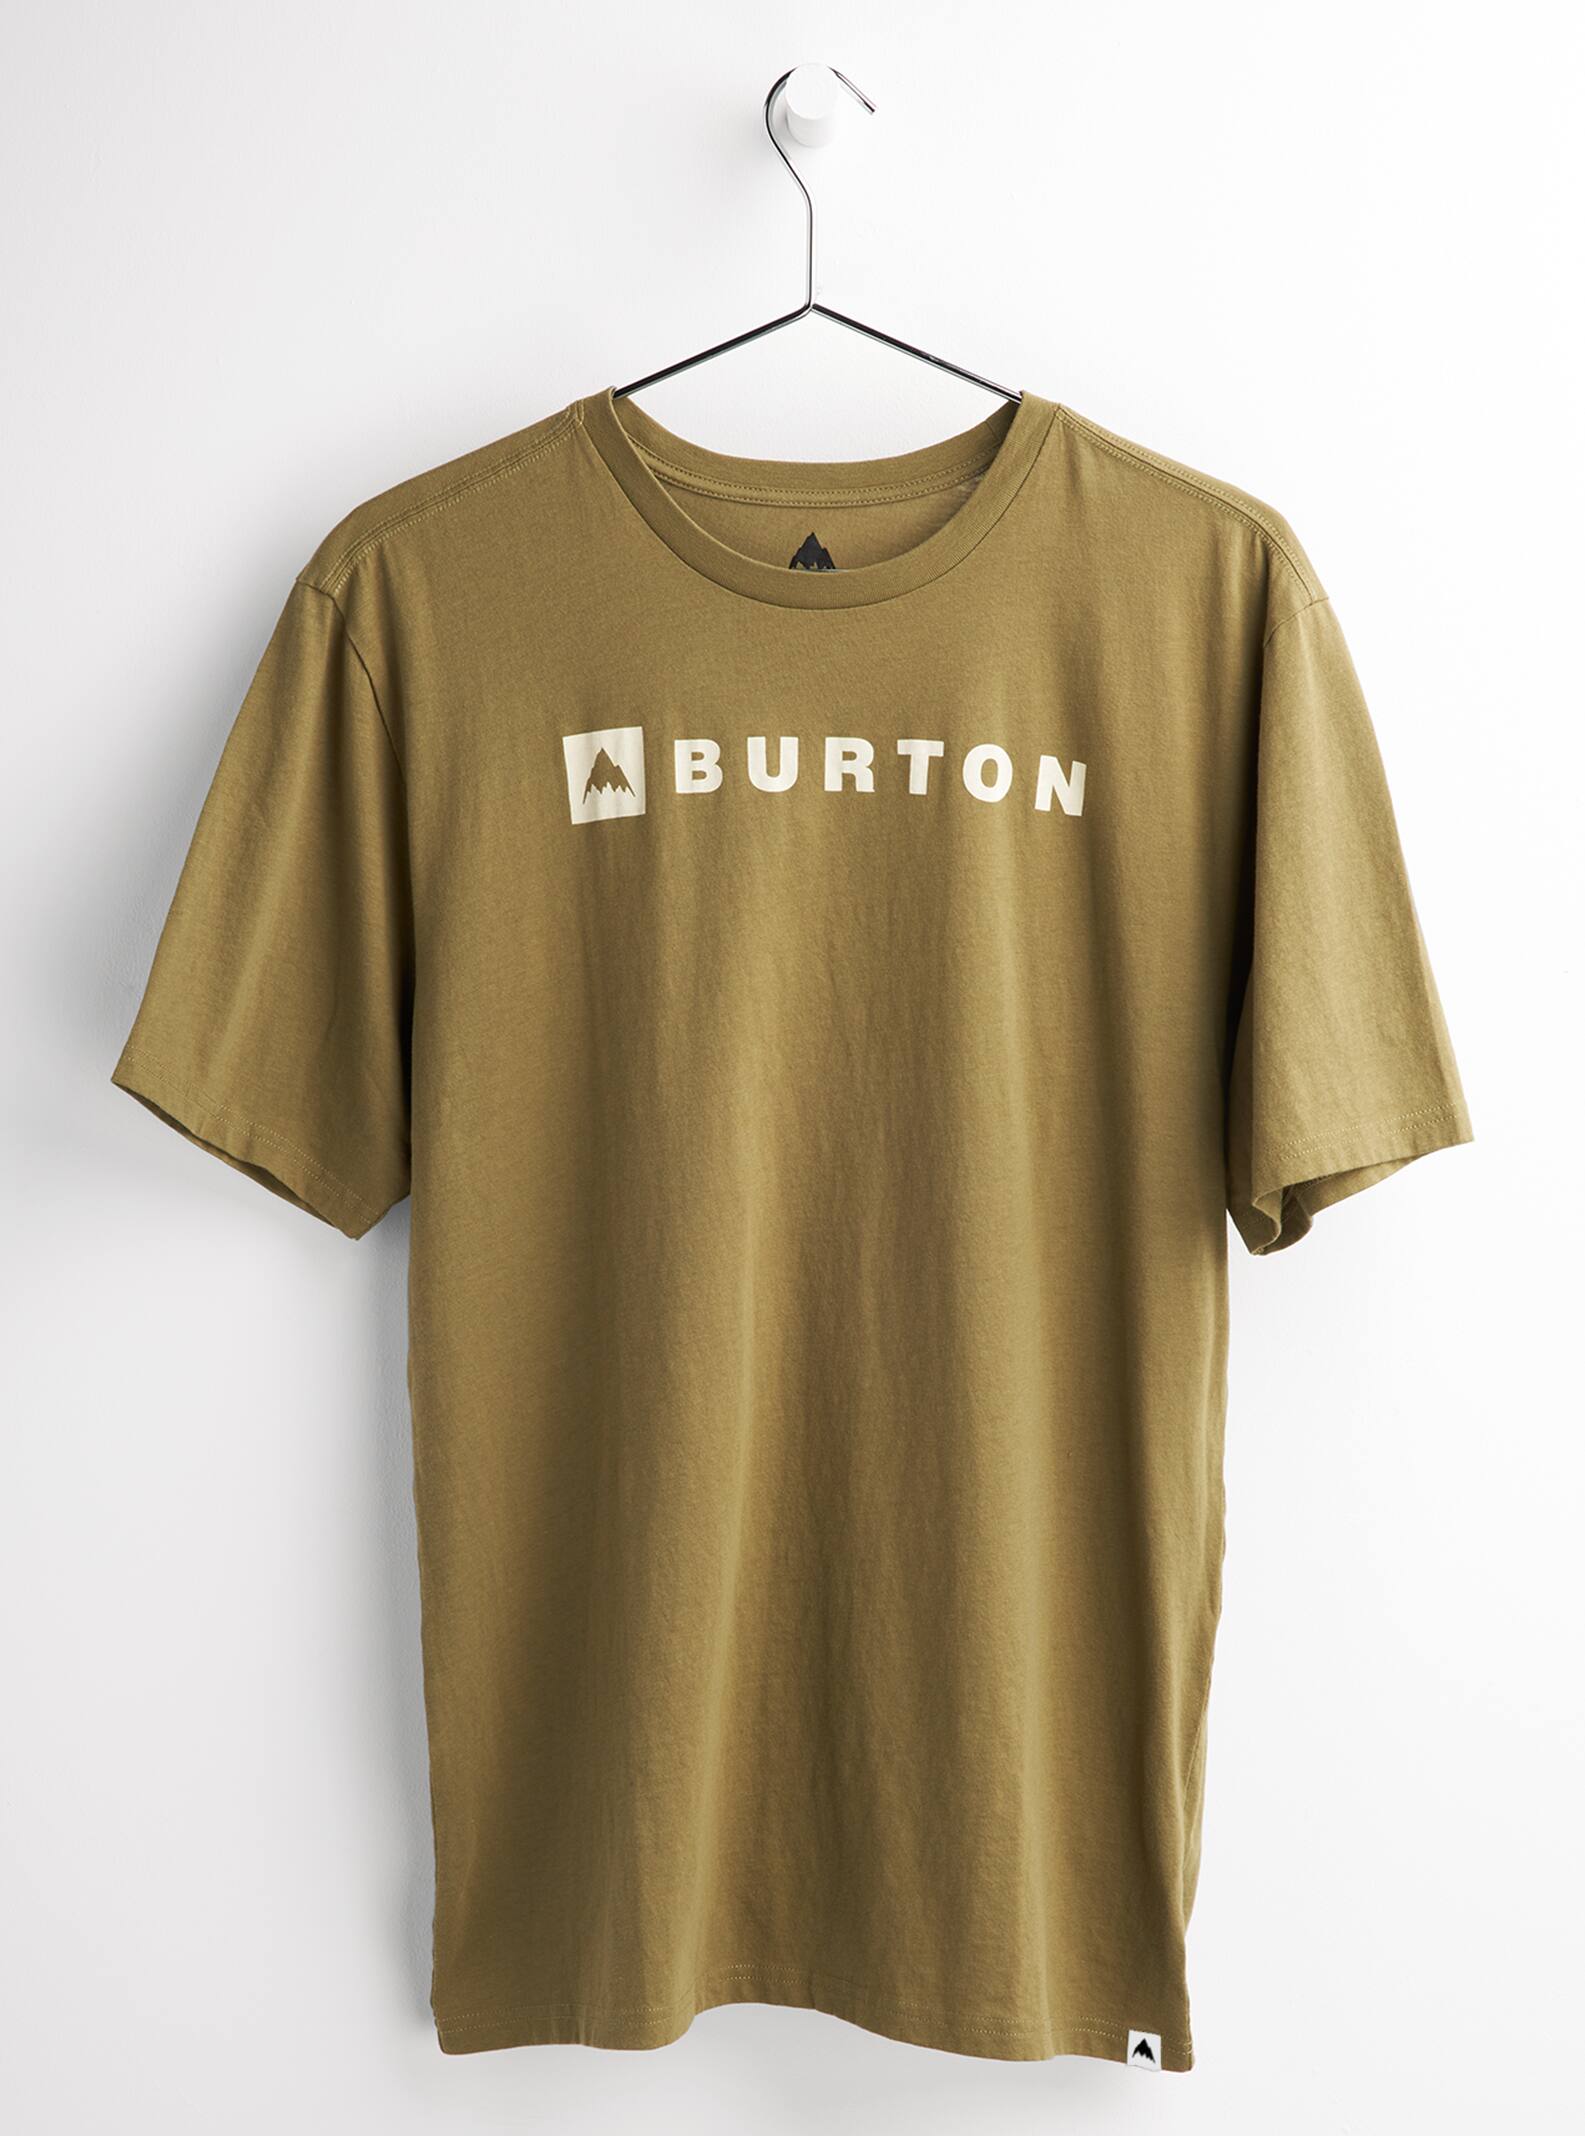 T-Shirts Burton Damen T-Shirt BURTON 40 Damen Kleidung Burton Damen Oberteile Burton Damen Tops T-Shirts Burton Damen Tops mehrfarbig L, T3 Tops 